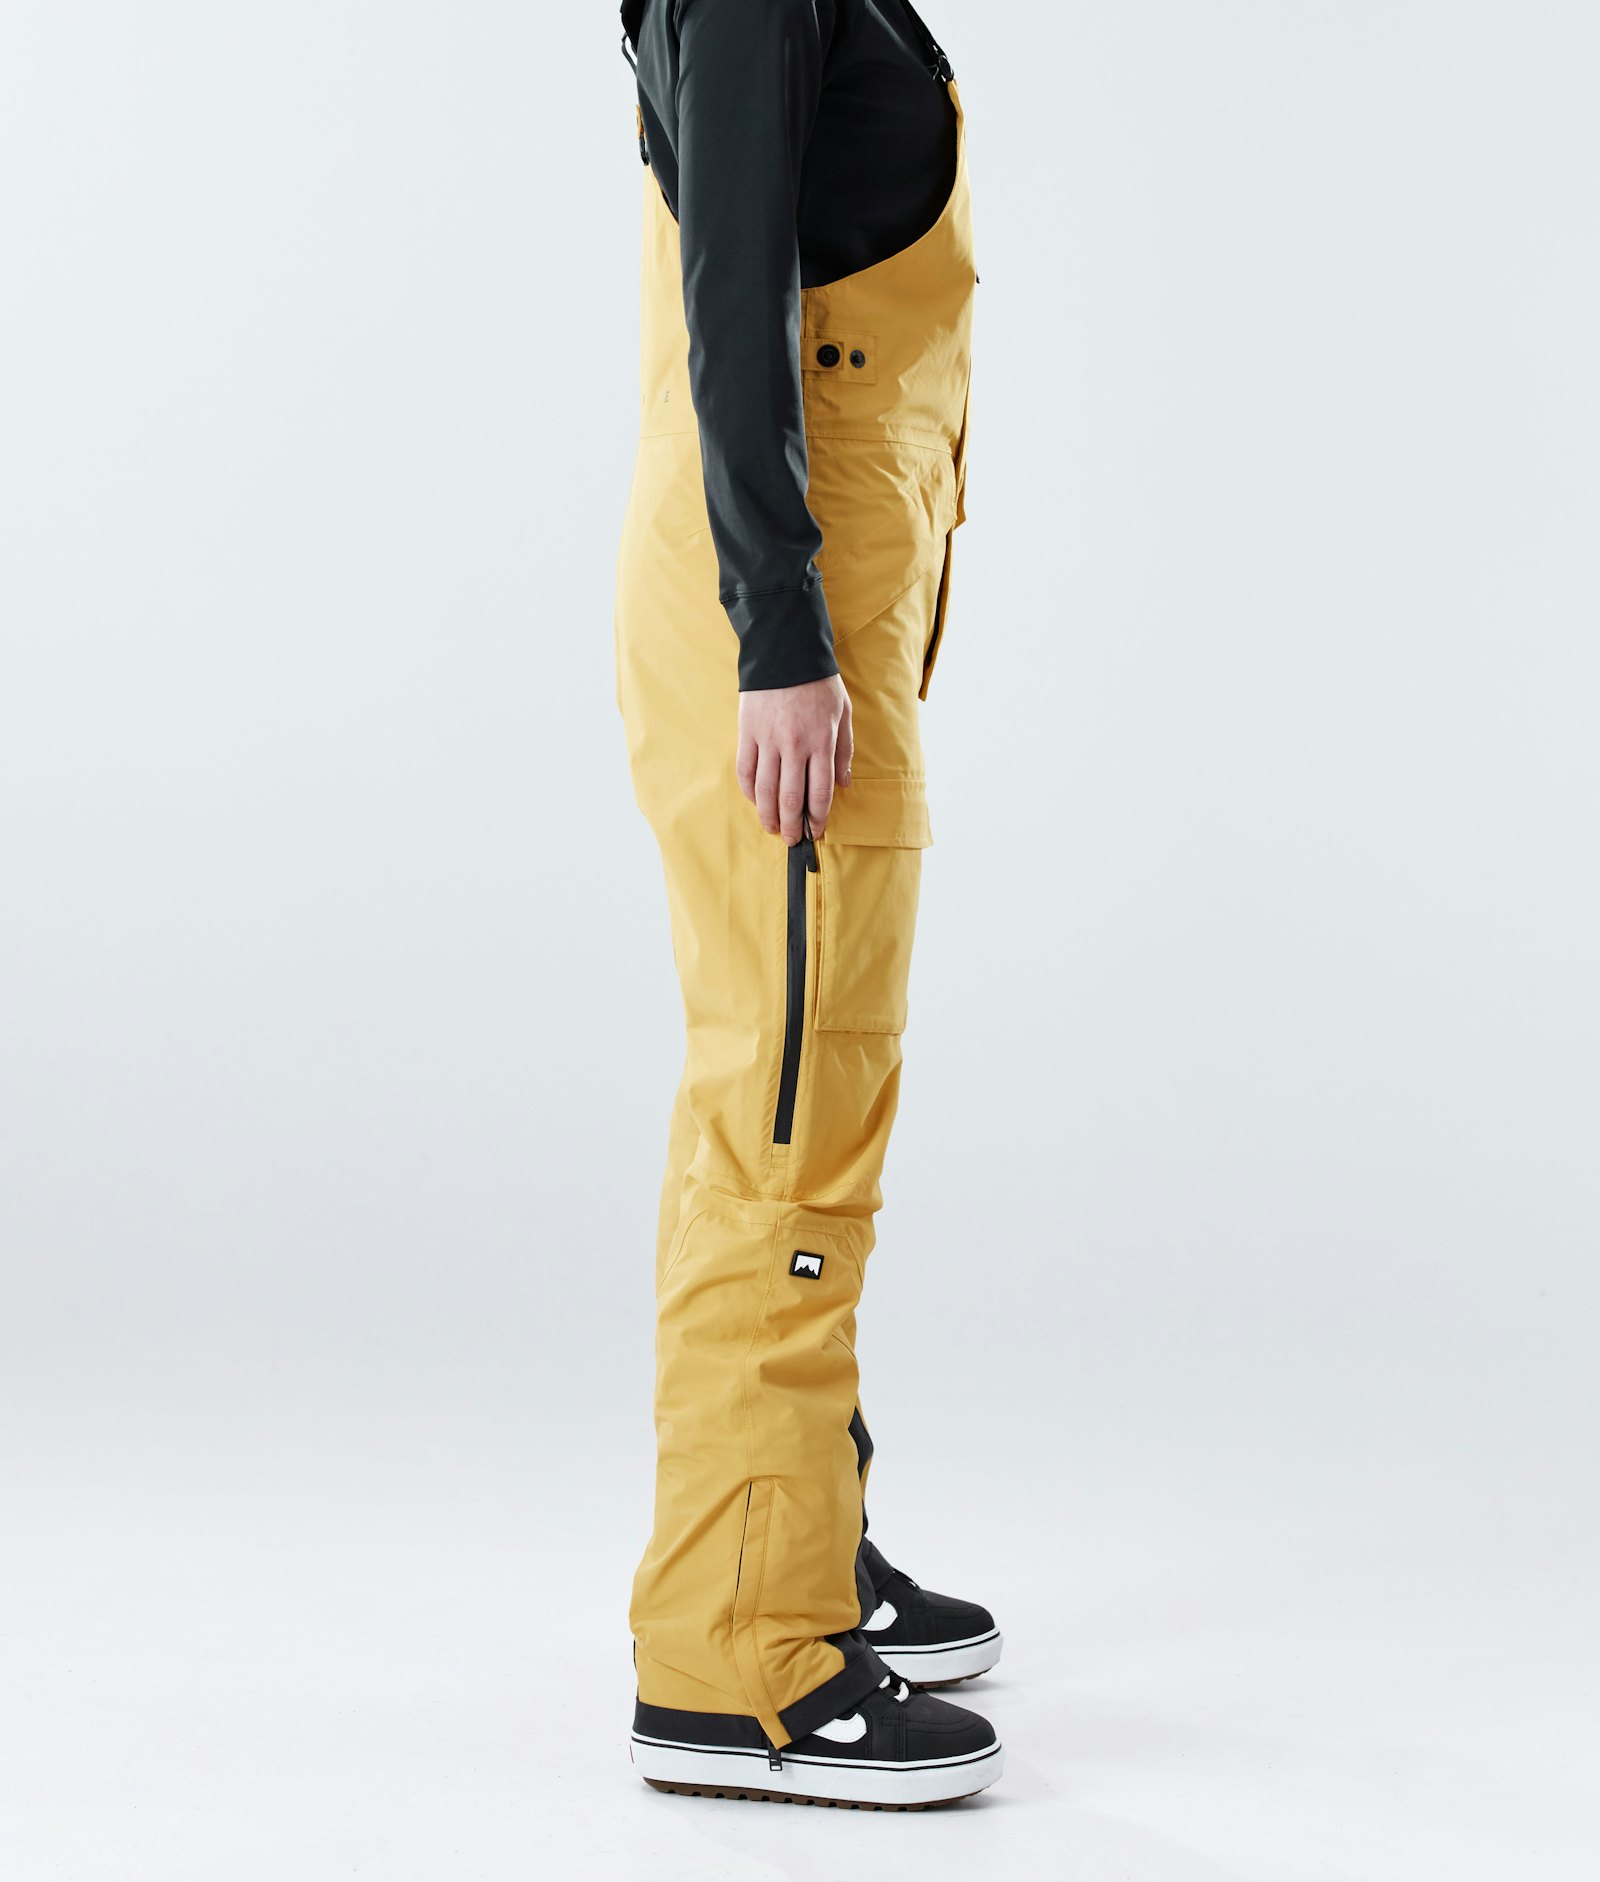 Fawk W 2020 Snowboard Pants Women Yellow